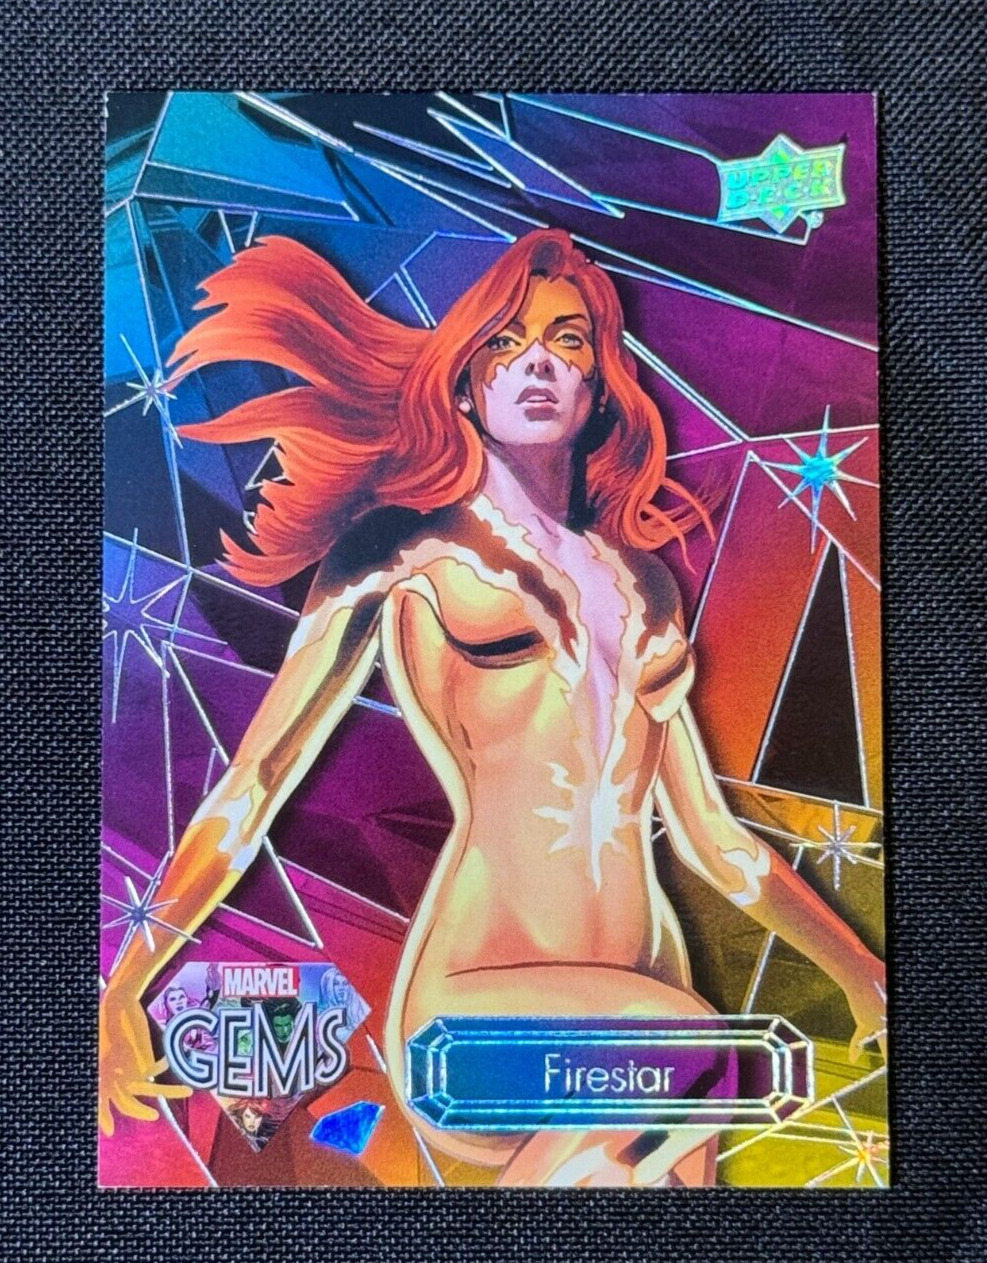 Firestar 2016 Upper Deck Marvel Gems /225 Card #3